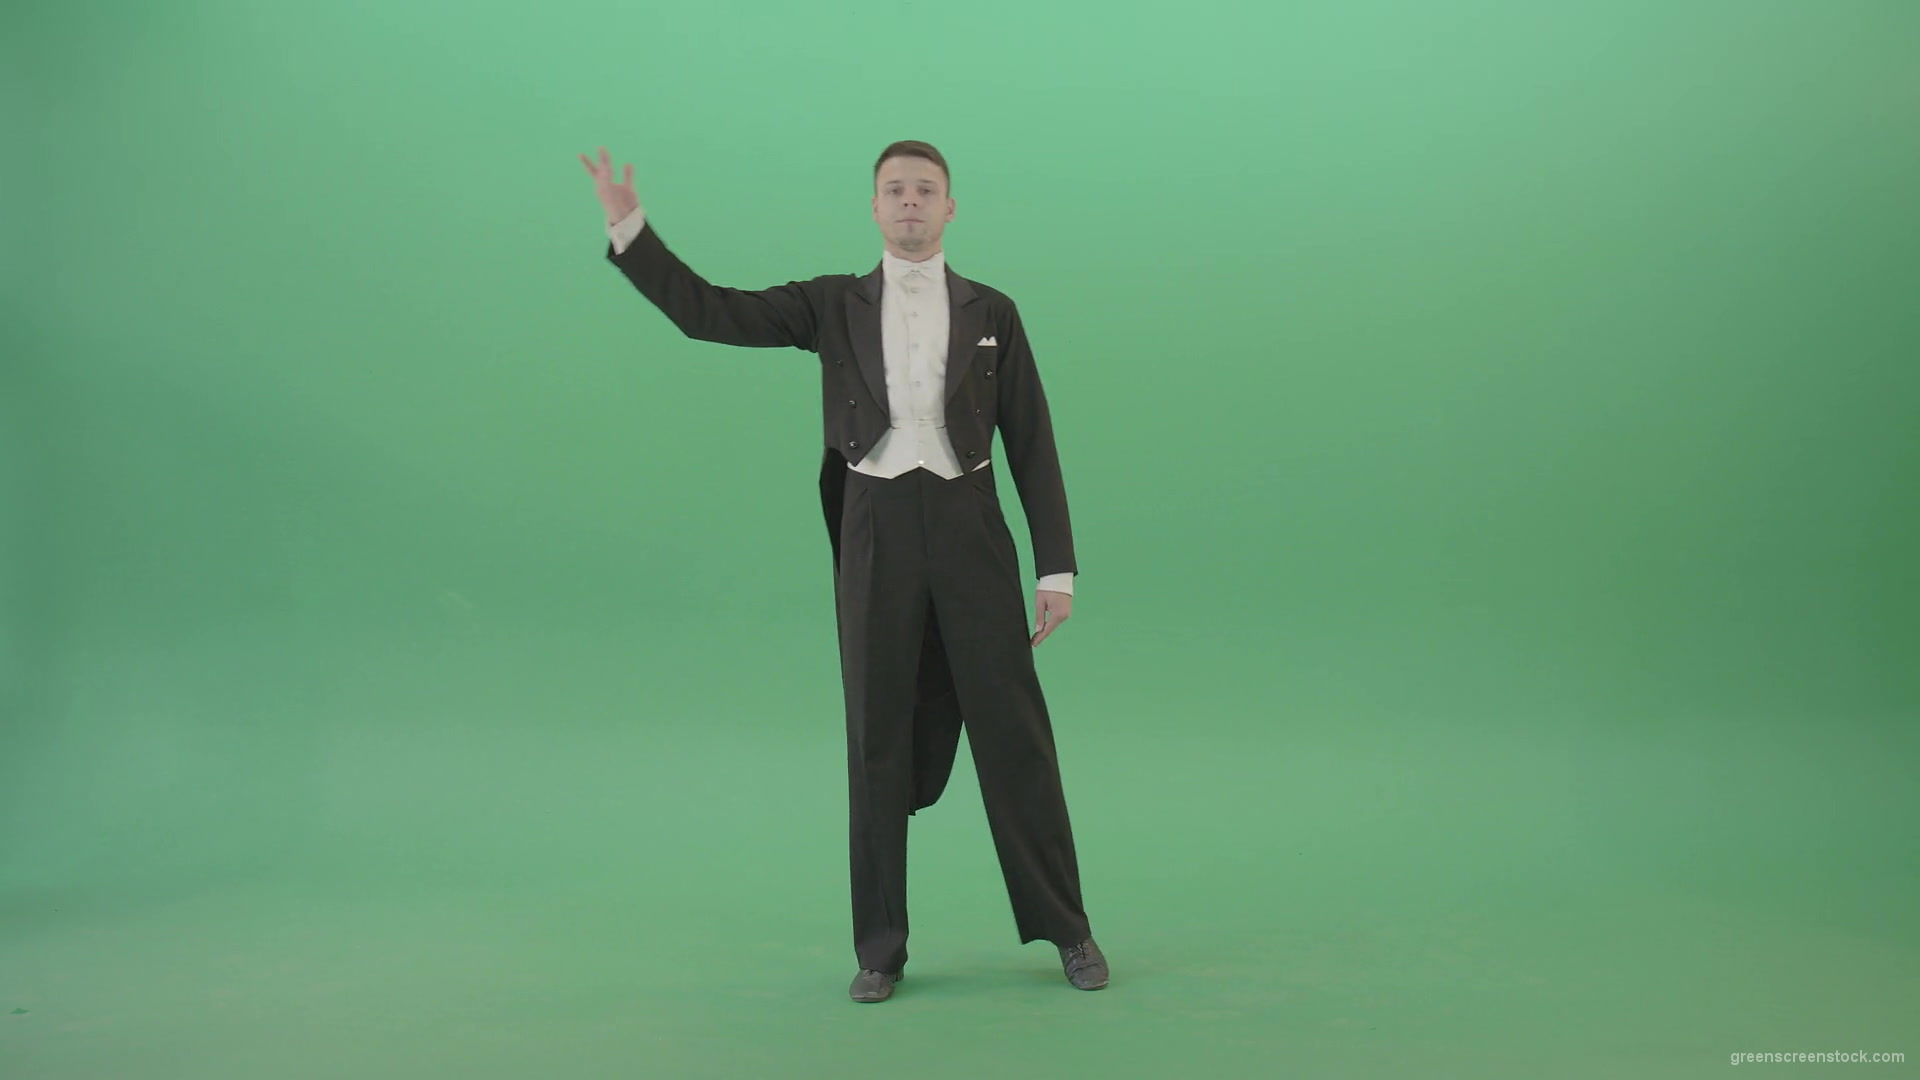 Ballroom-dancing-man-on-green-screen-making-reverence-4K-Video-Footage-1920_007 Green Screen Stock